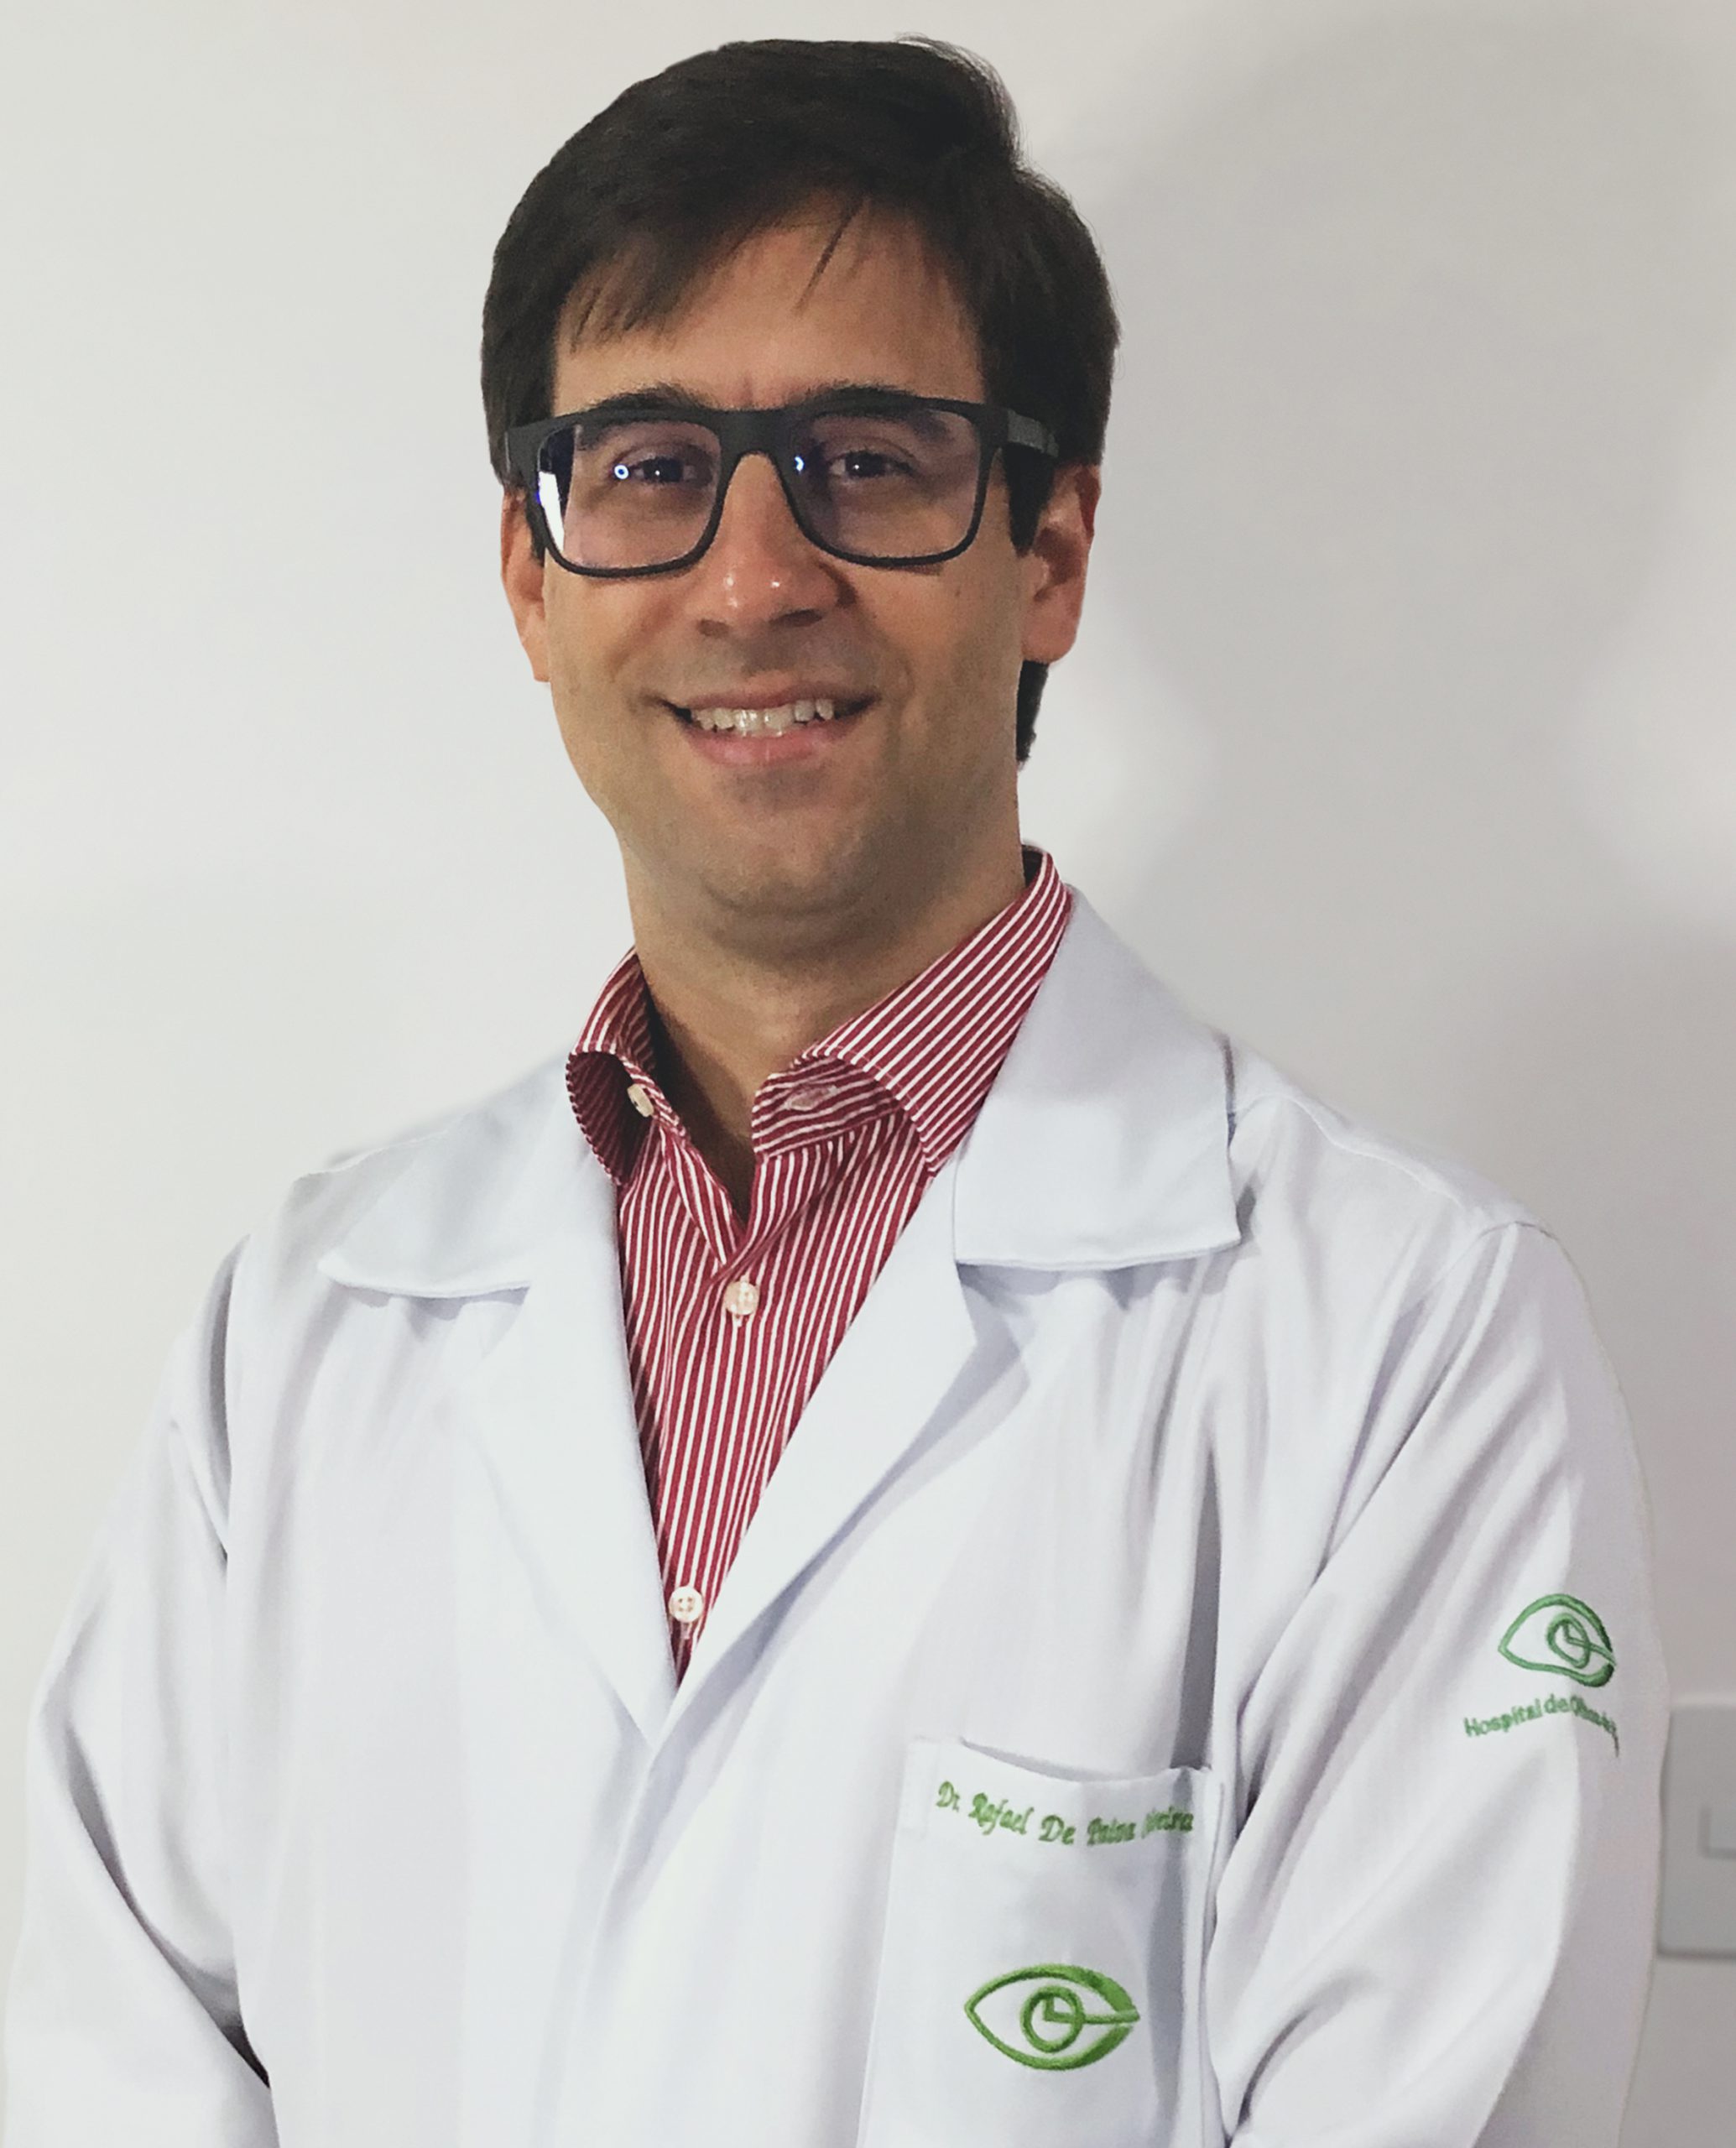 DR. RAFAEL DE PAIVA OLIVEIRA